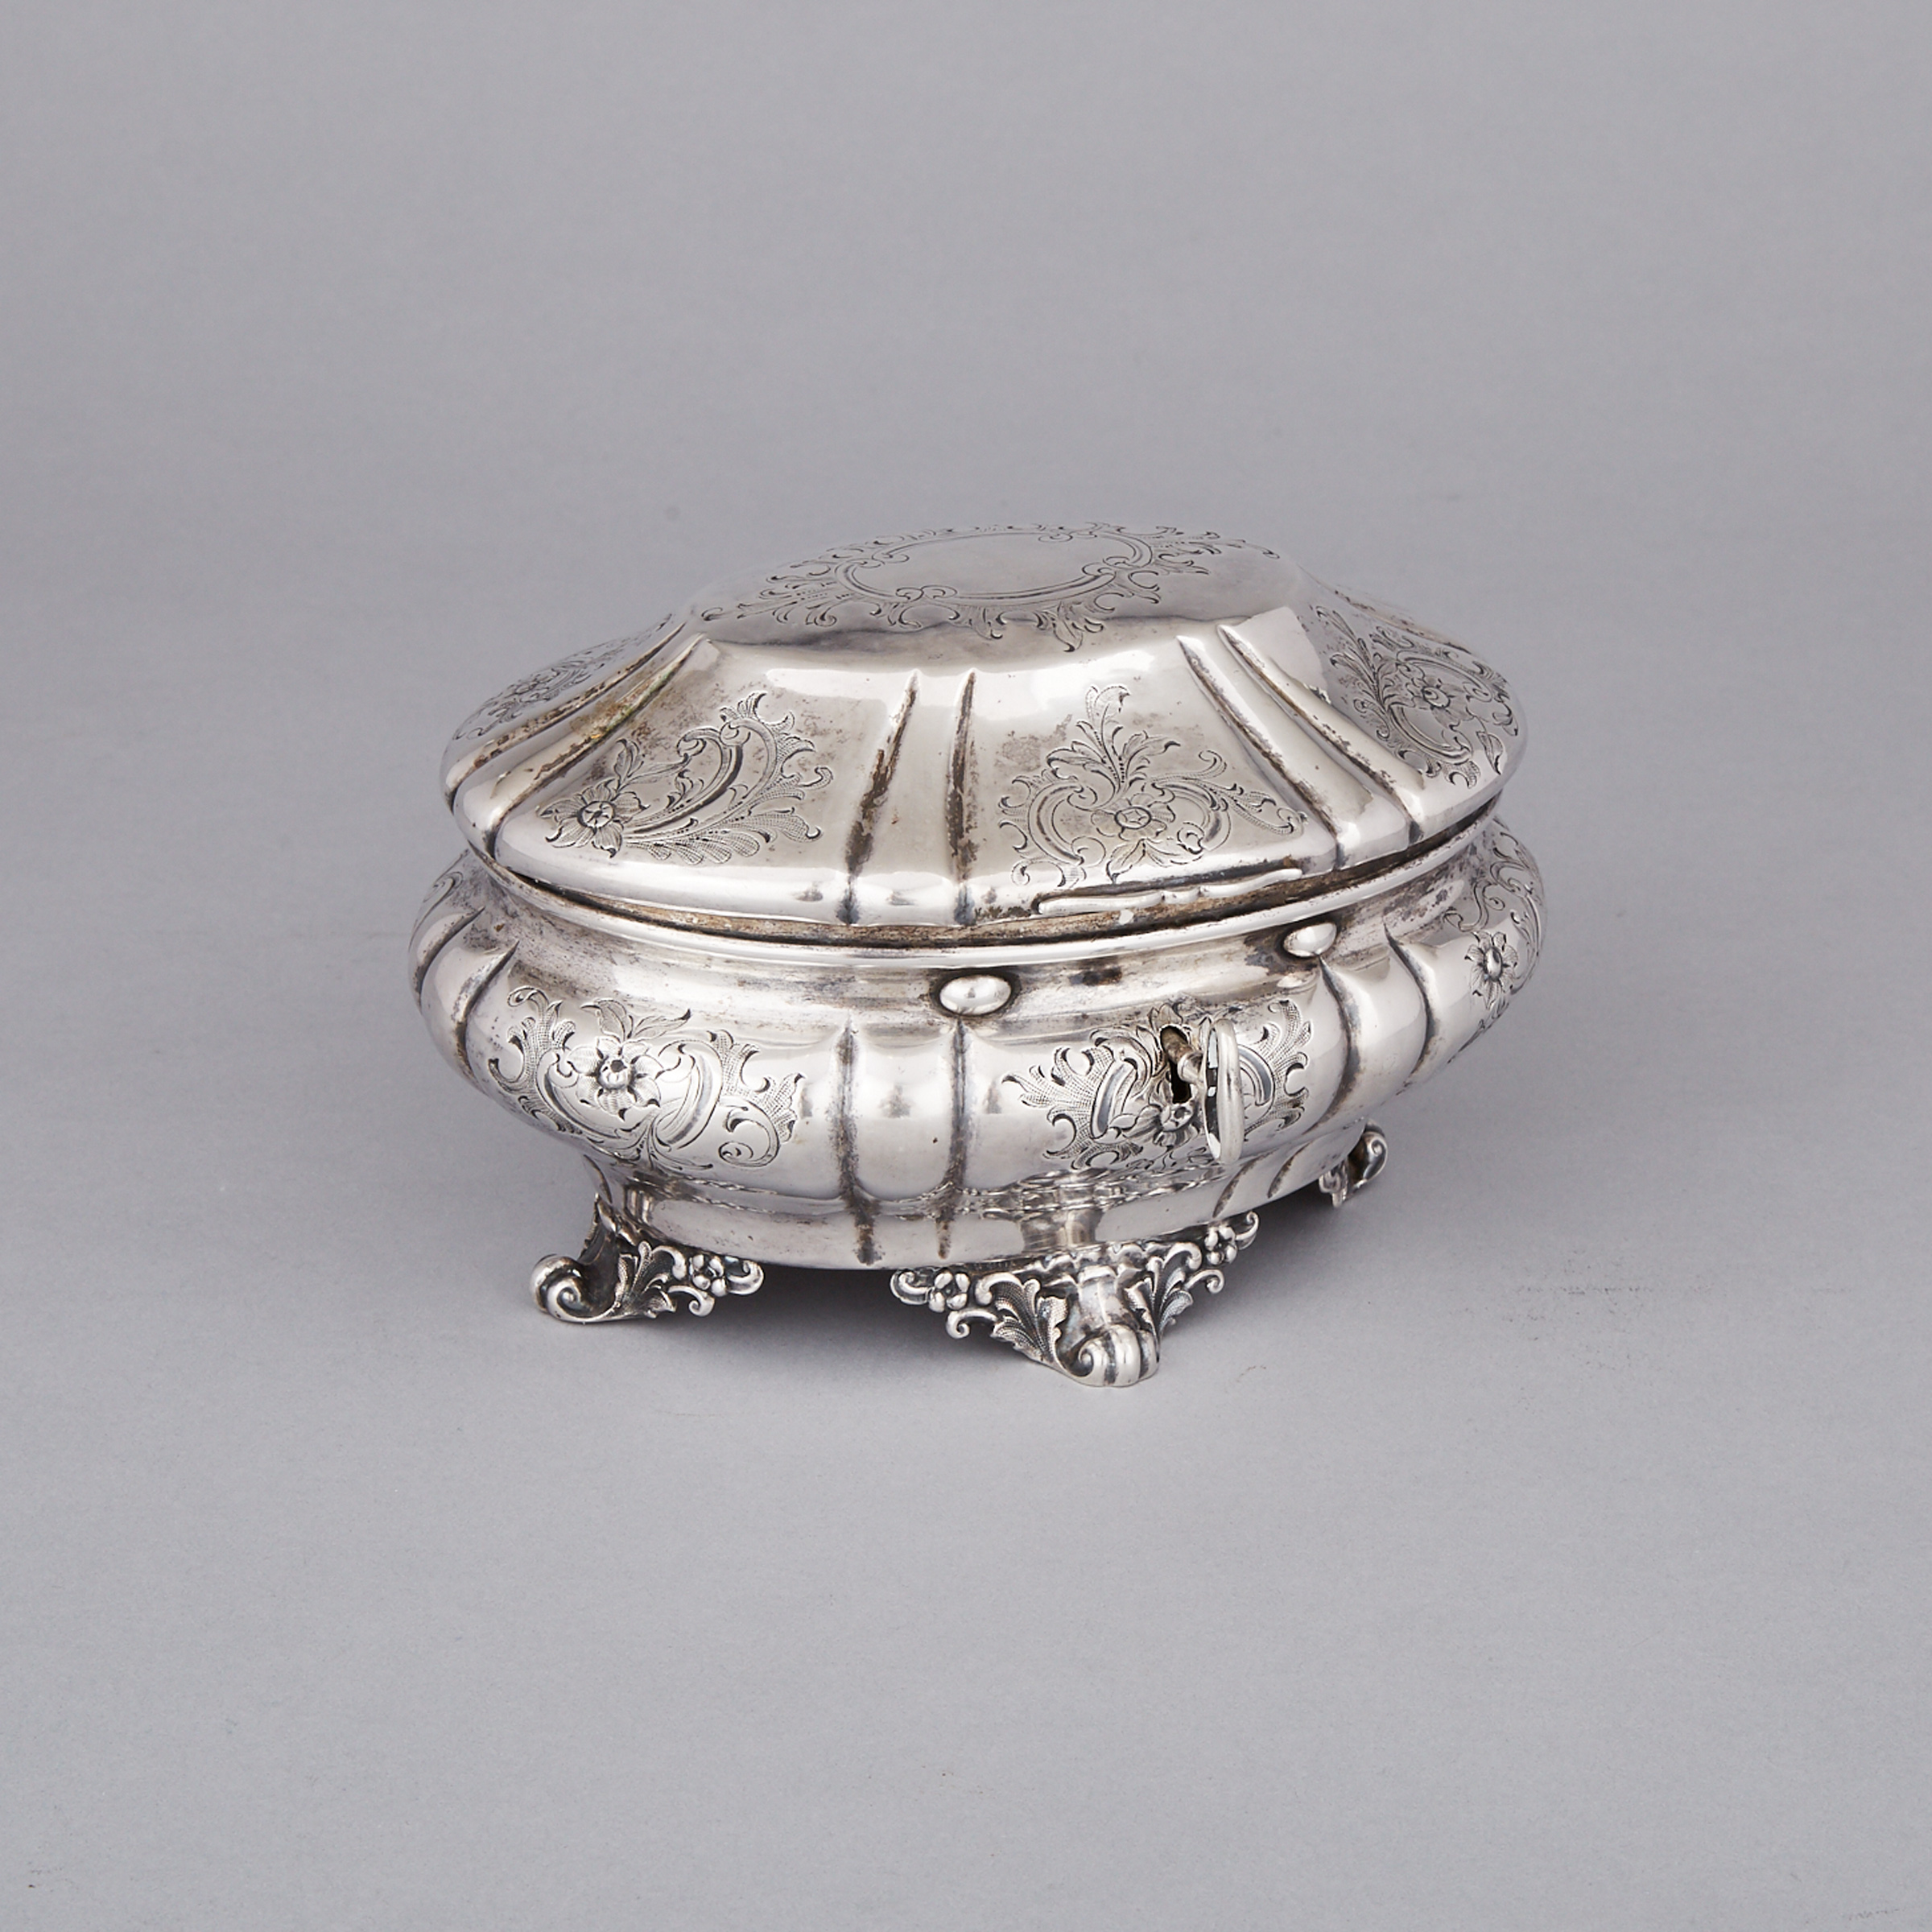 Swiss Silver Oval Sugar Box, 19th century